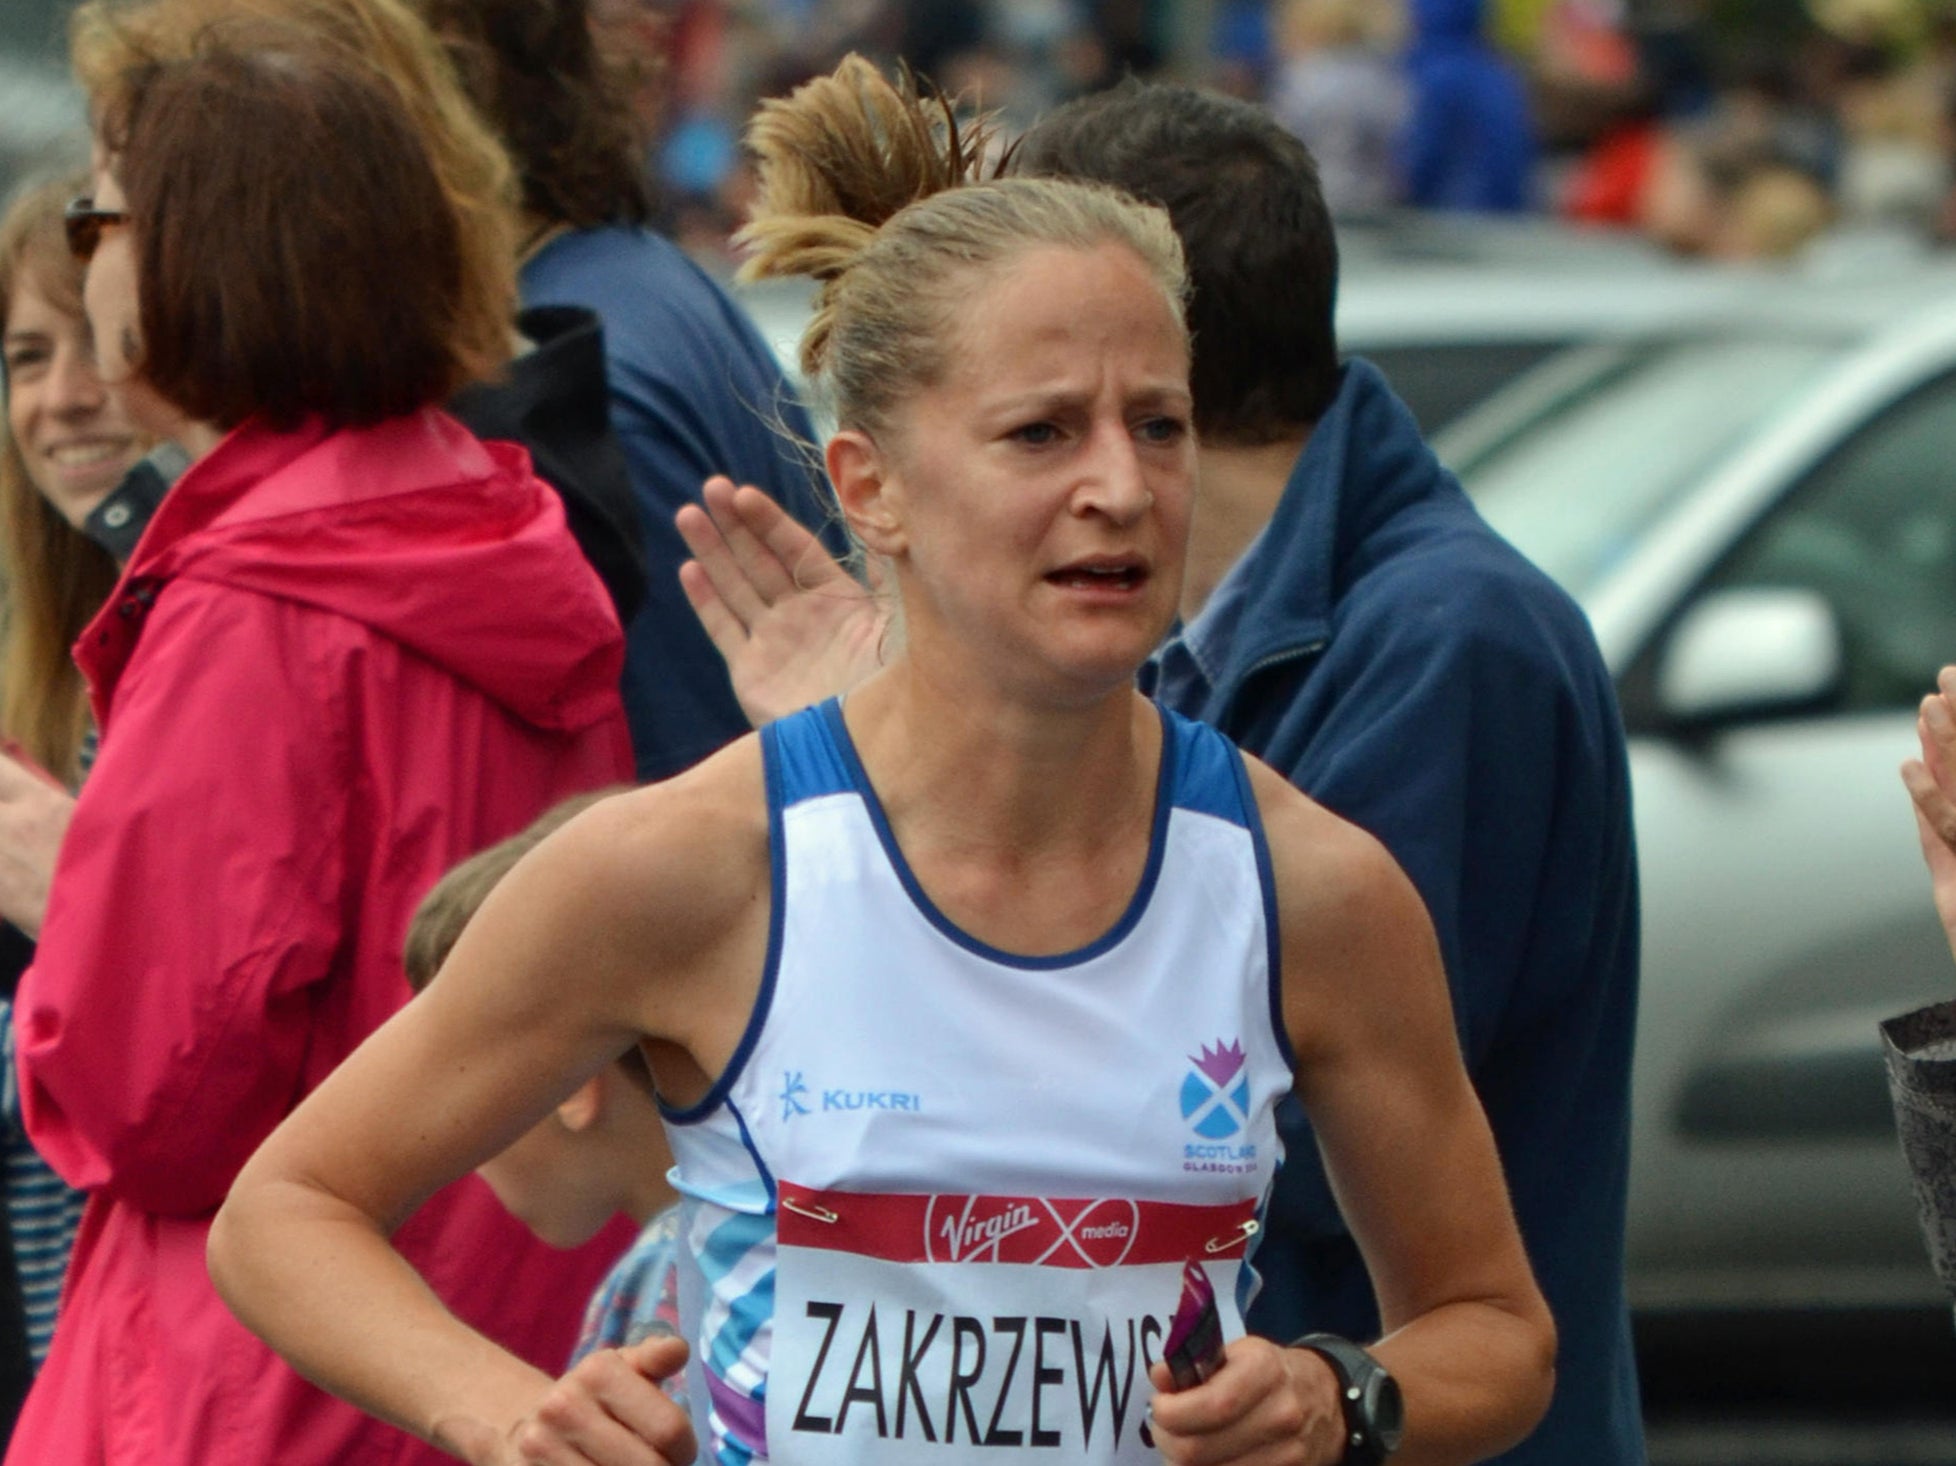 Joasia Zakrzewski (Scotland) running the women’s marathon at the Glasgow Commonwealth Games 2014